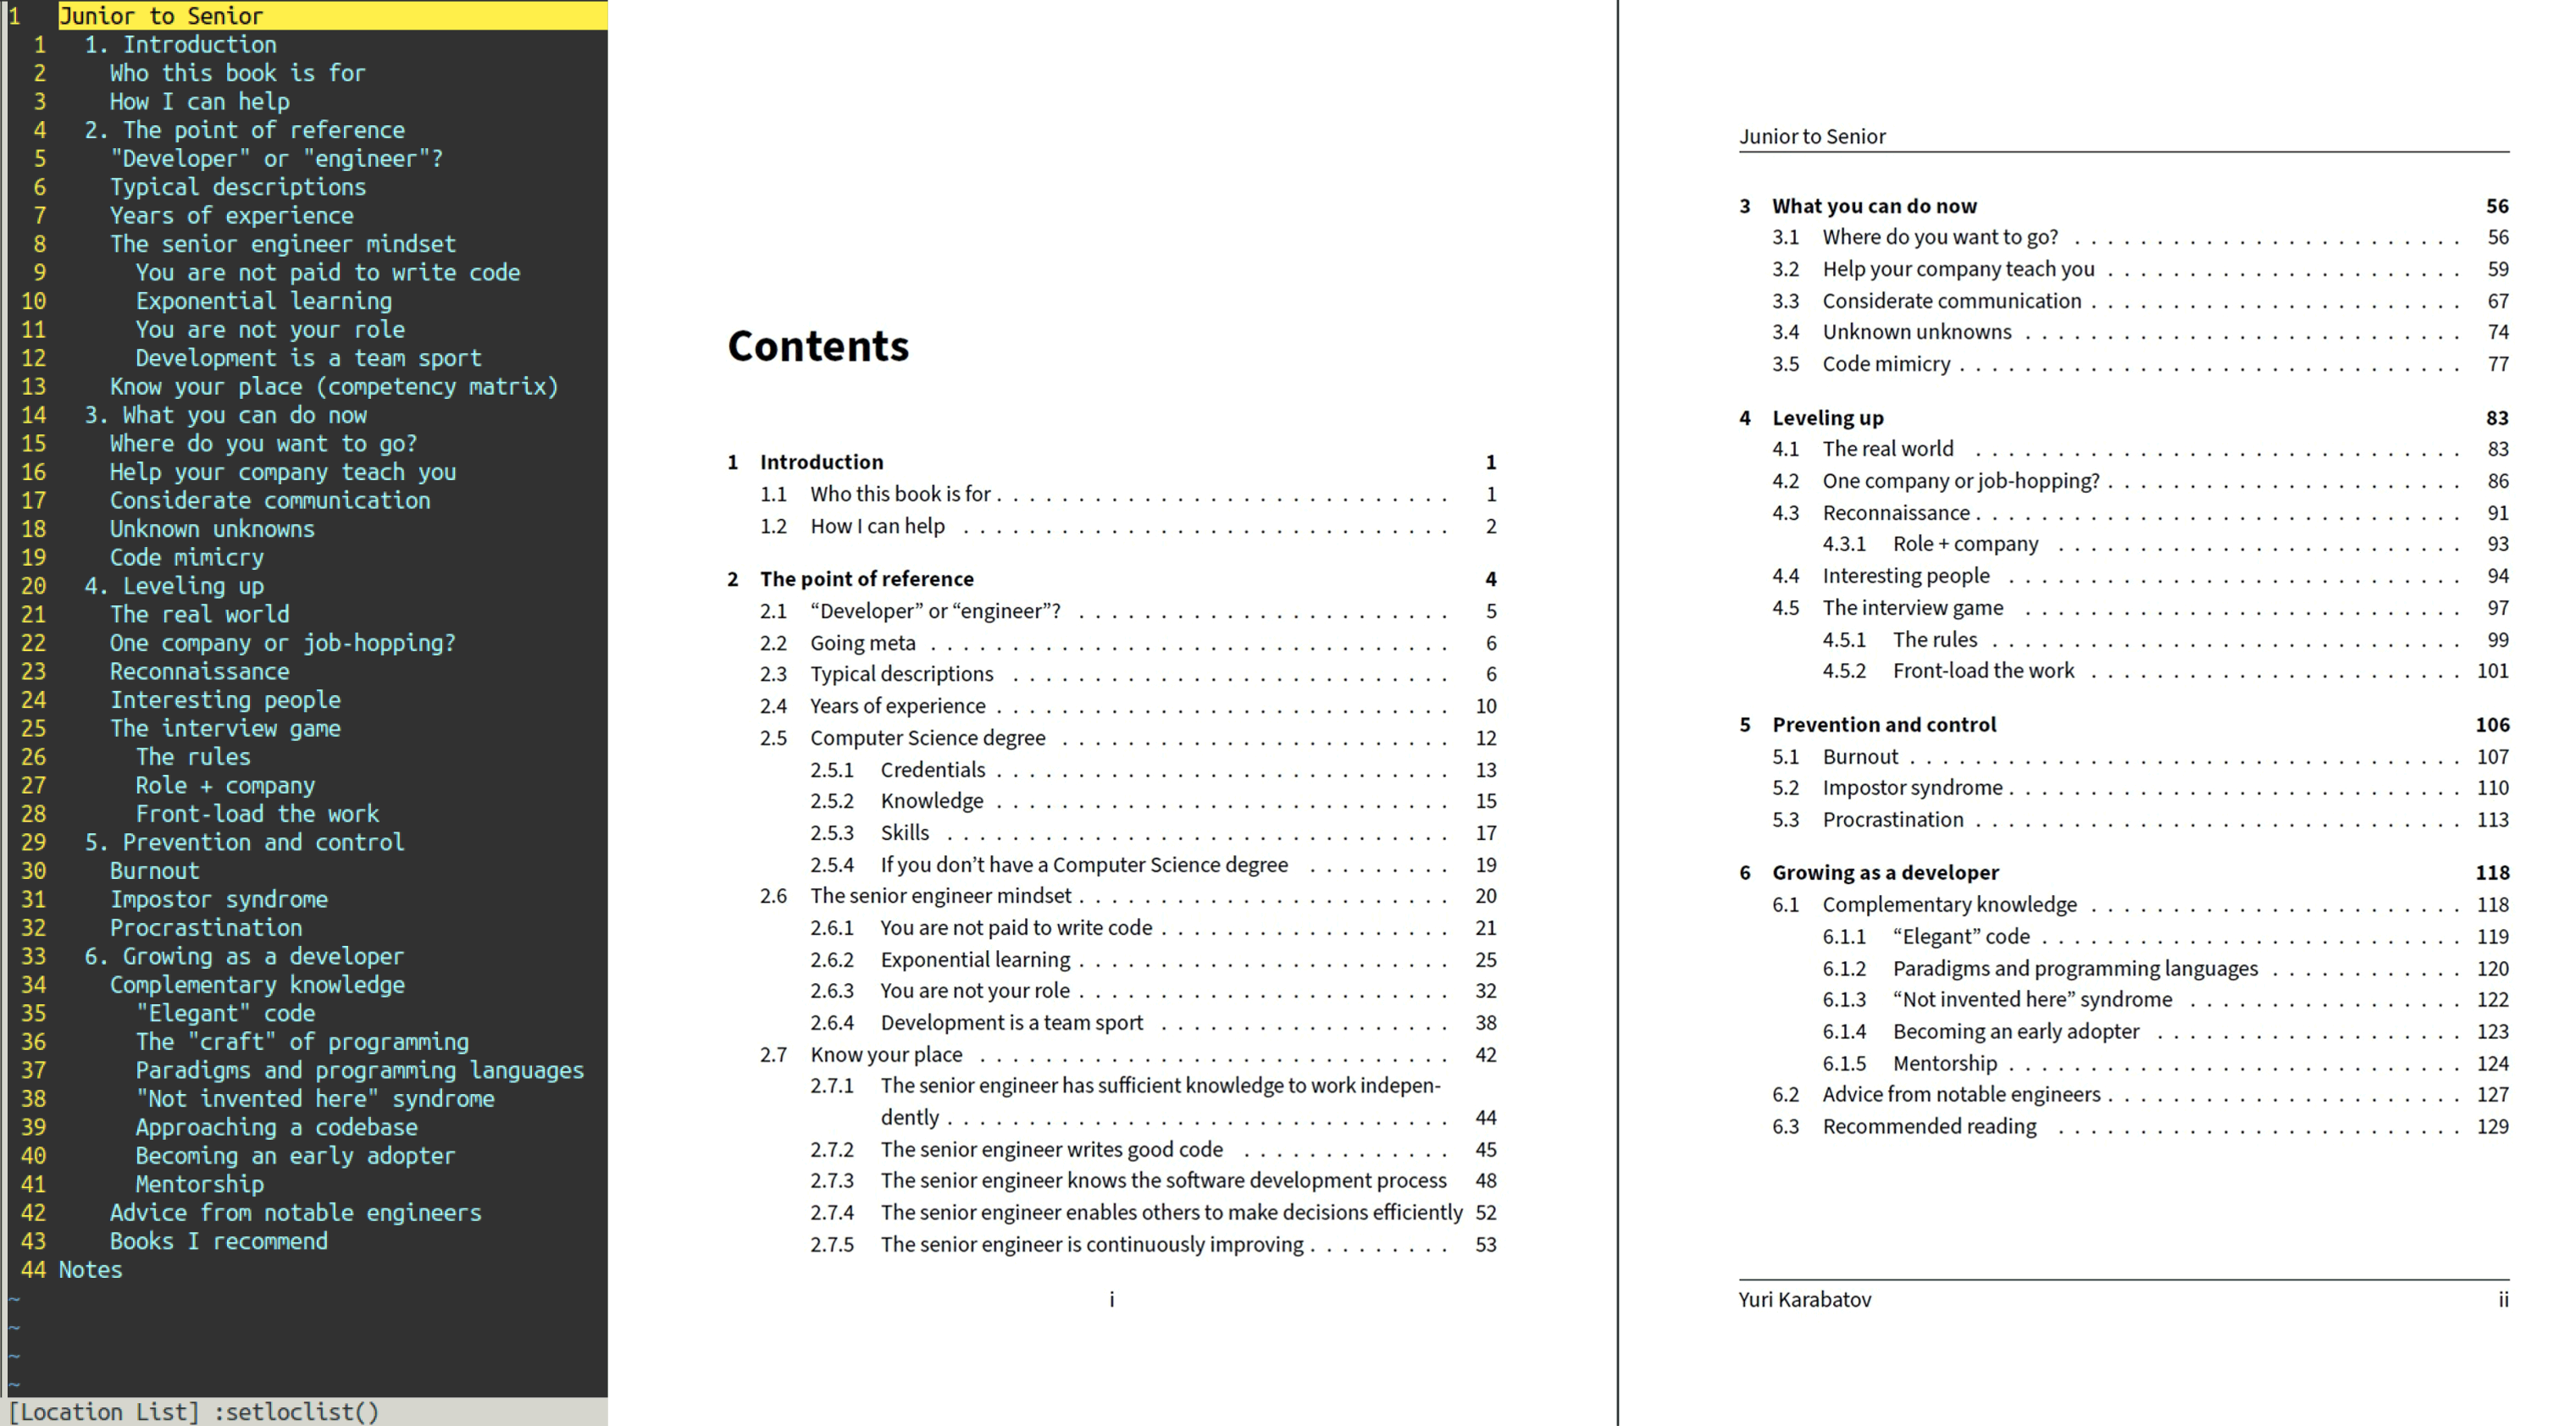 Table of contents comparison